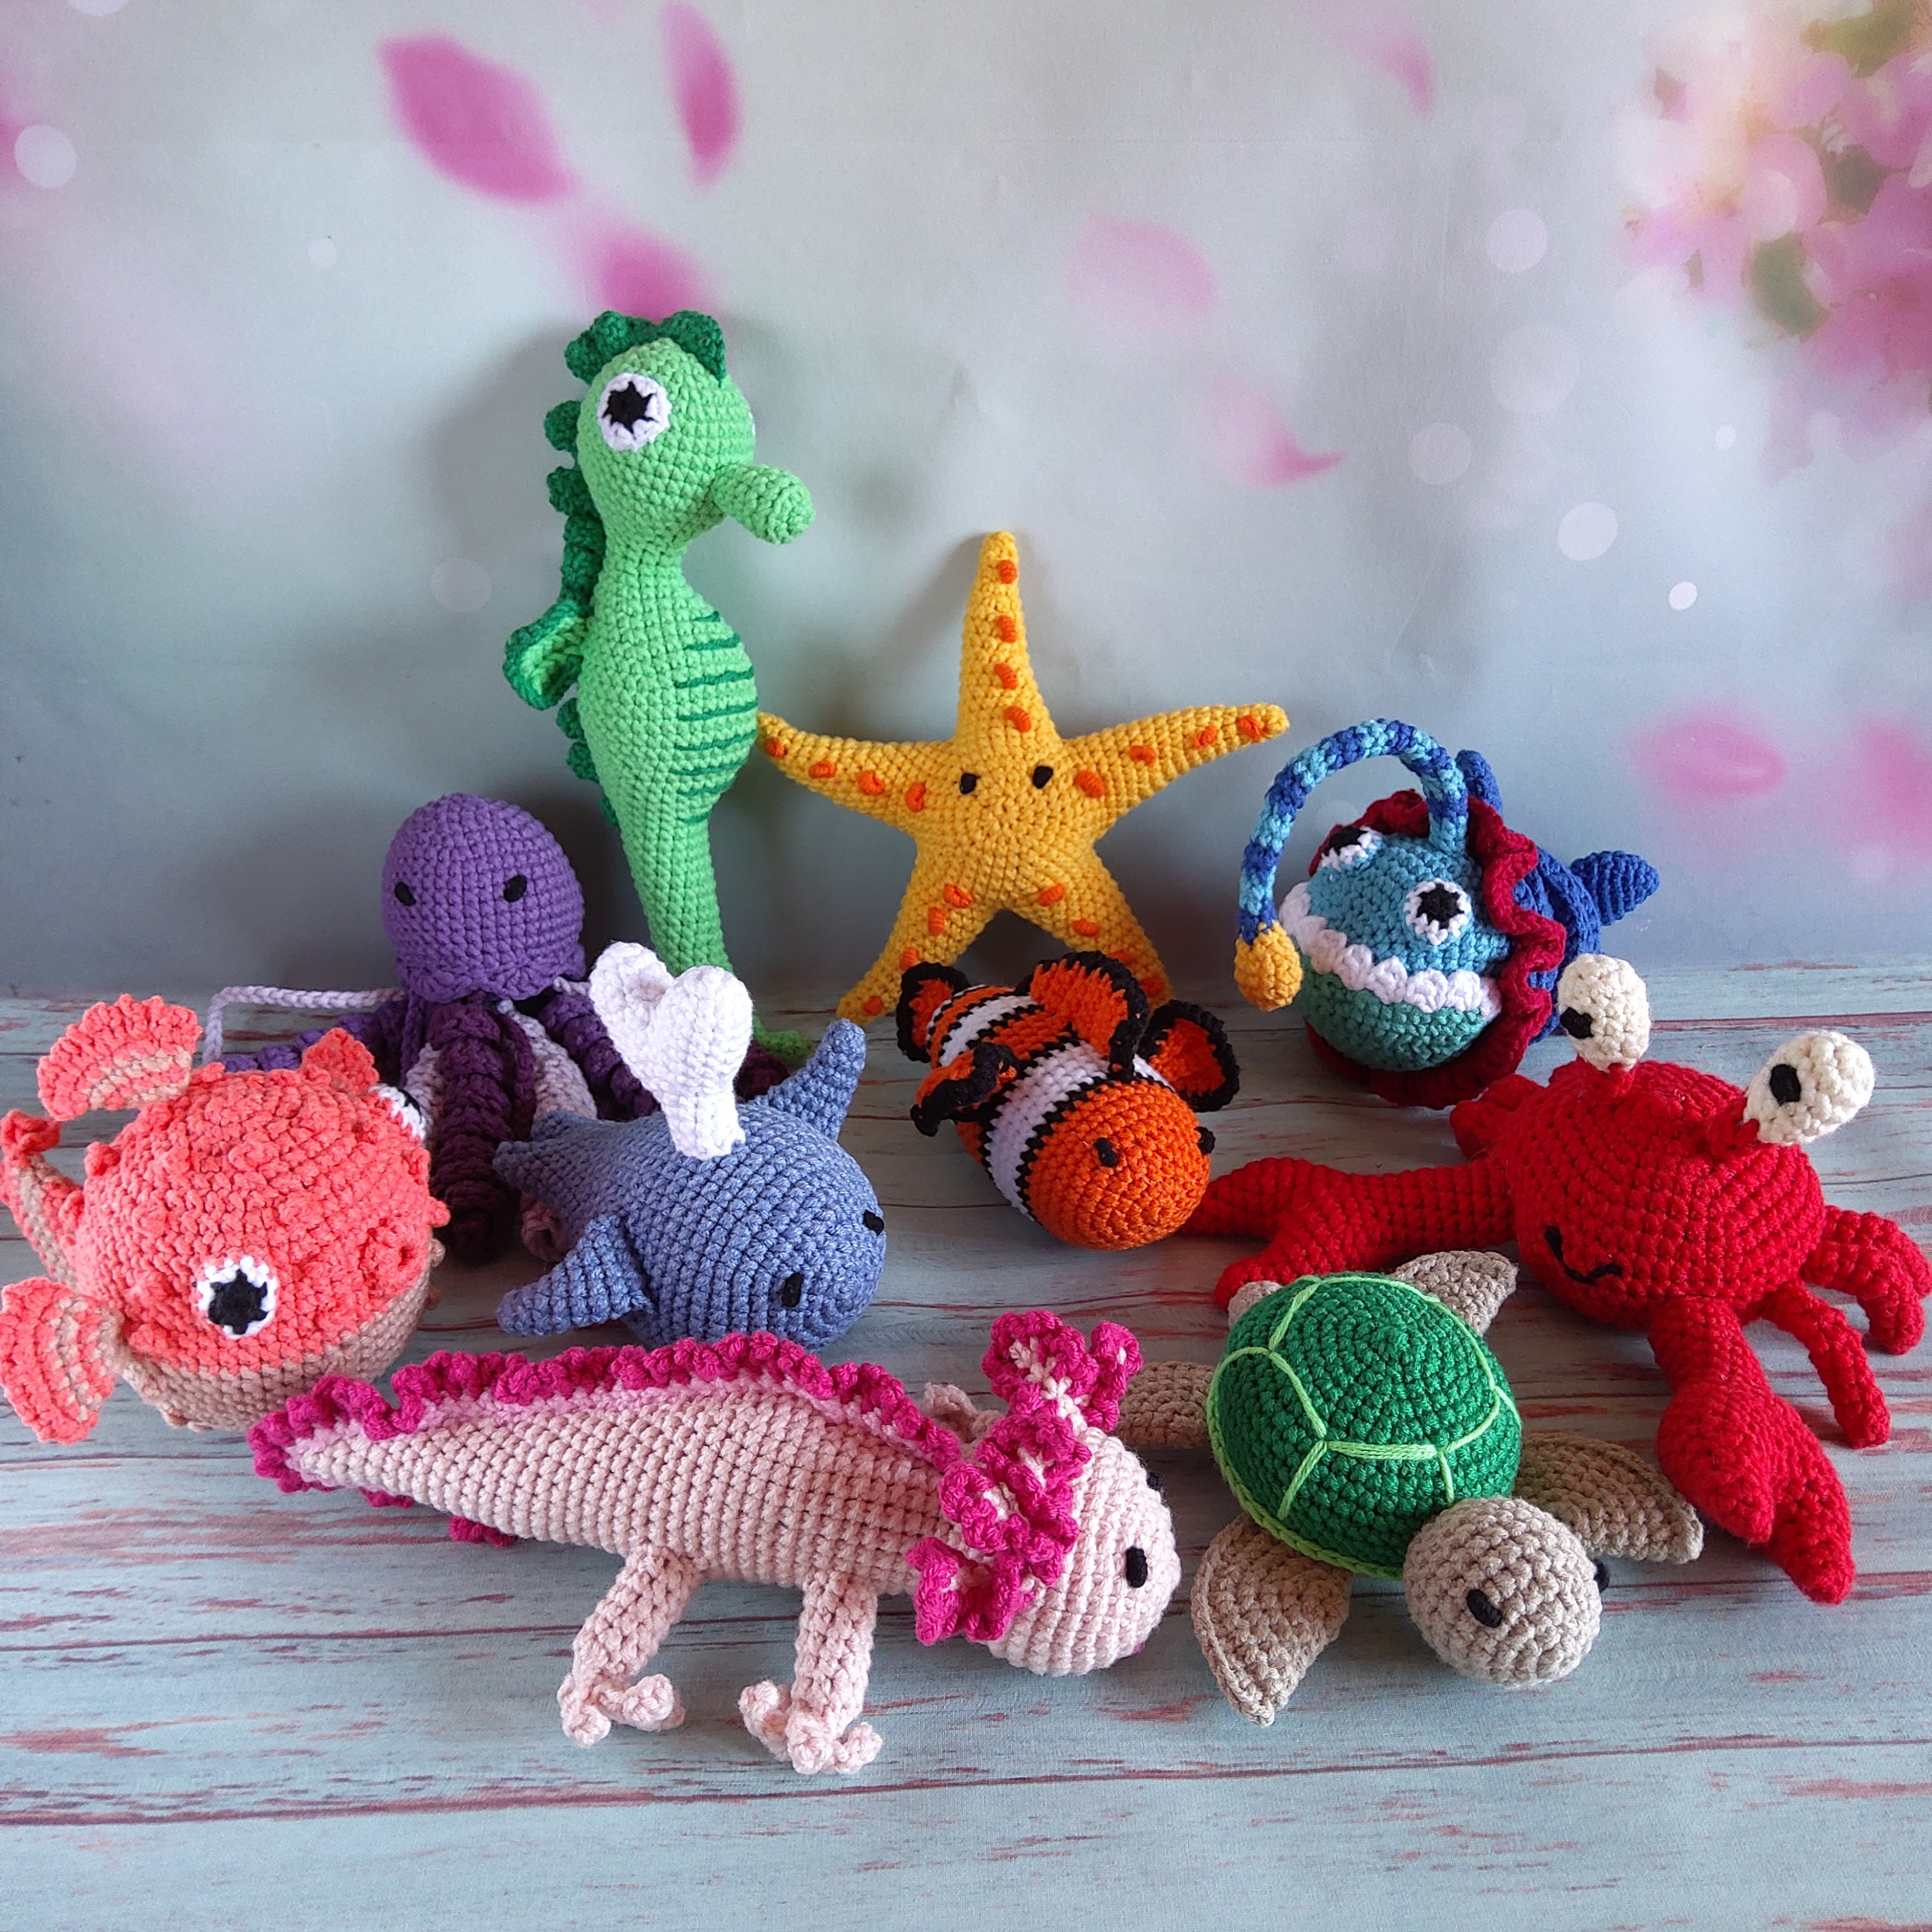 Crochet pattern for beginners - Sea Creatures